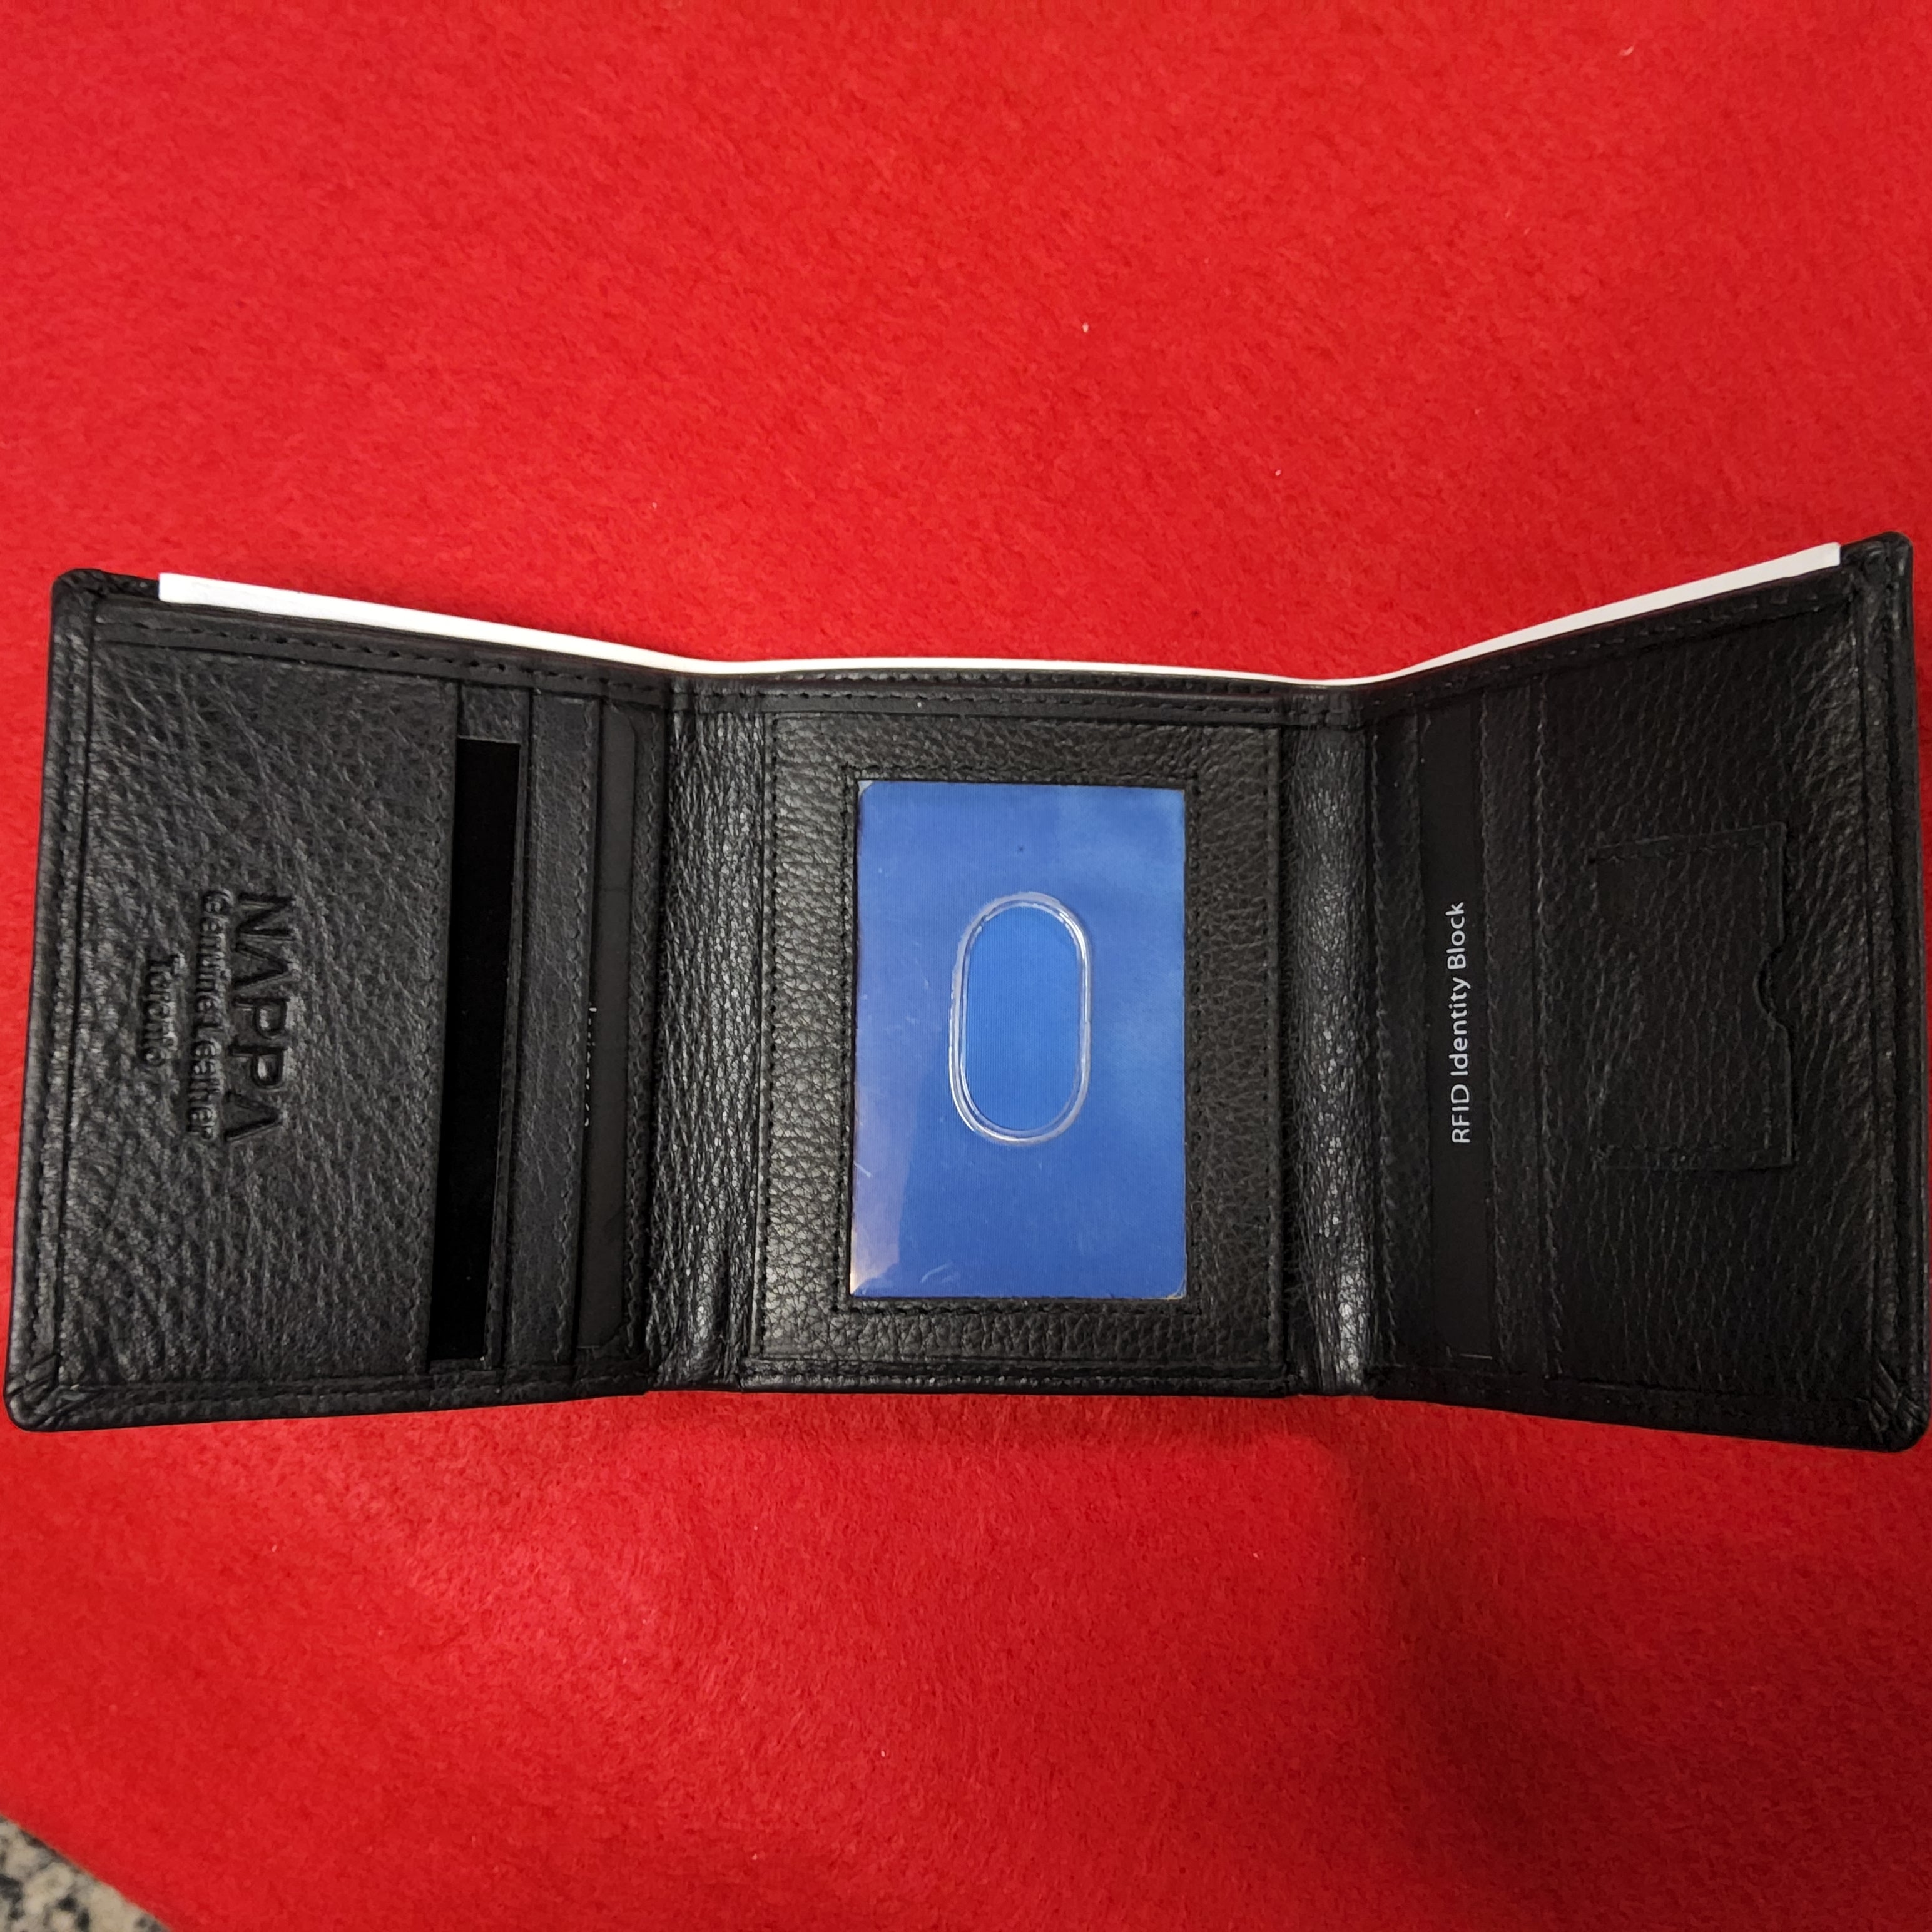 NAPPA Leather Wallet - Trifold Bill Wallet - RFID Identity Block